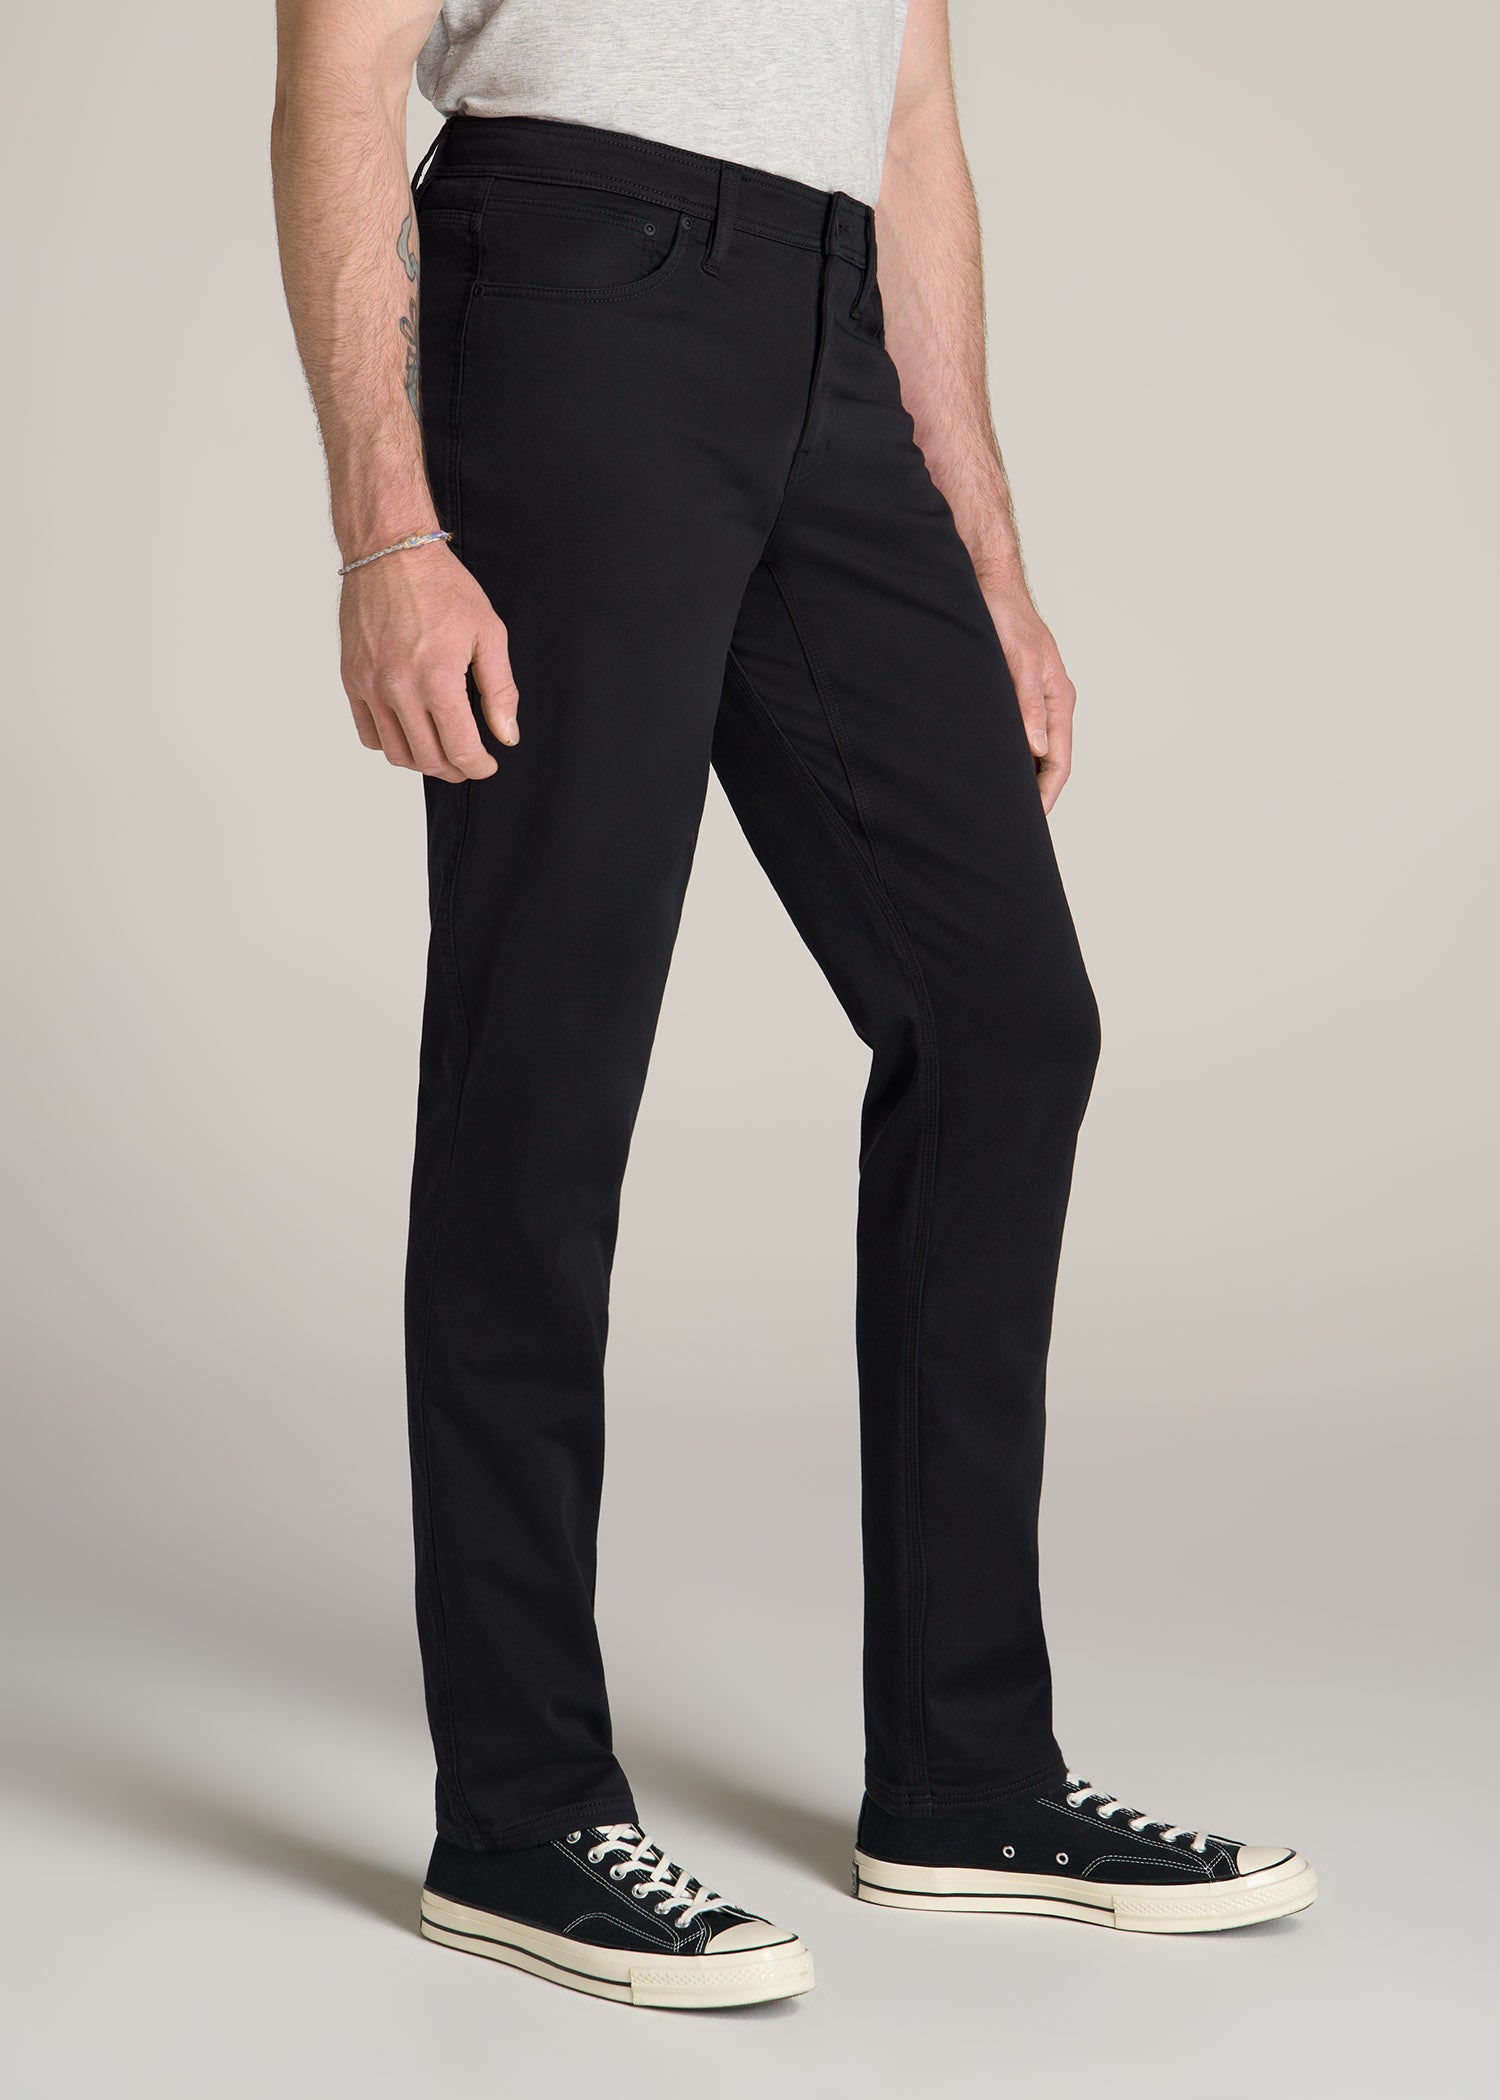 American-Tall-Men-Everyday-Comfort-Five-Pocket-Pant-Black-side